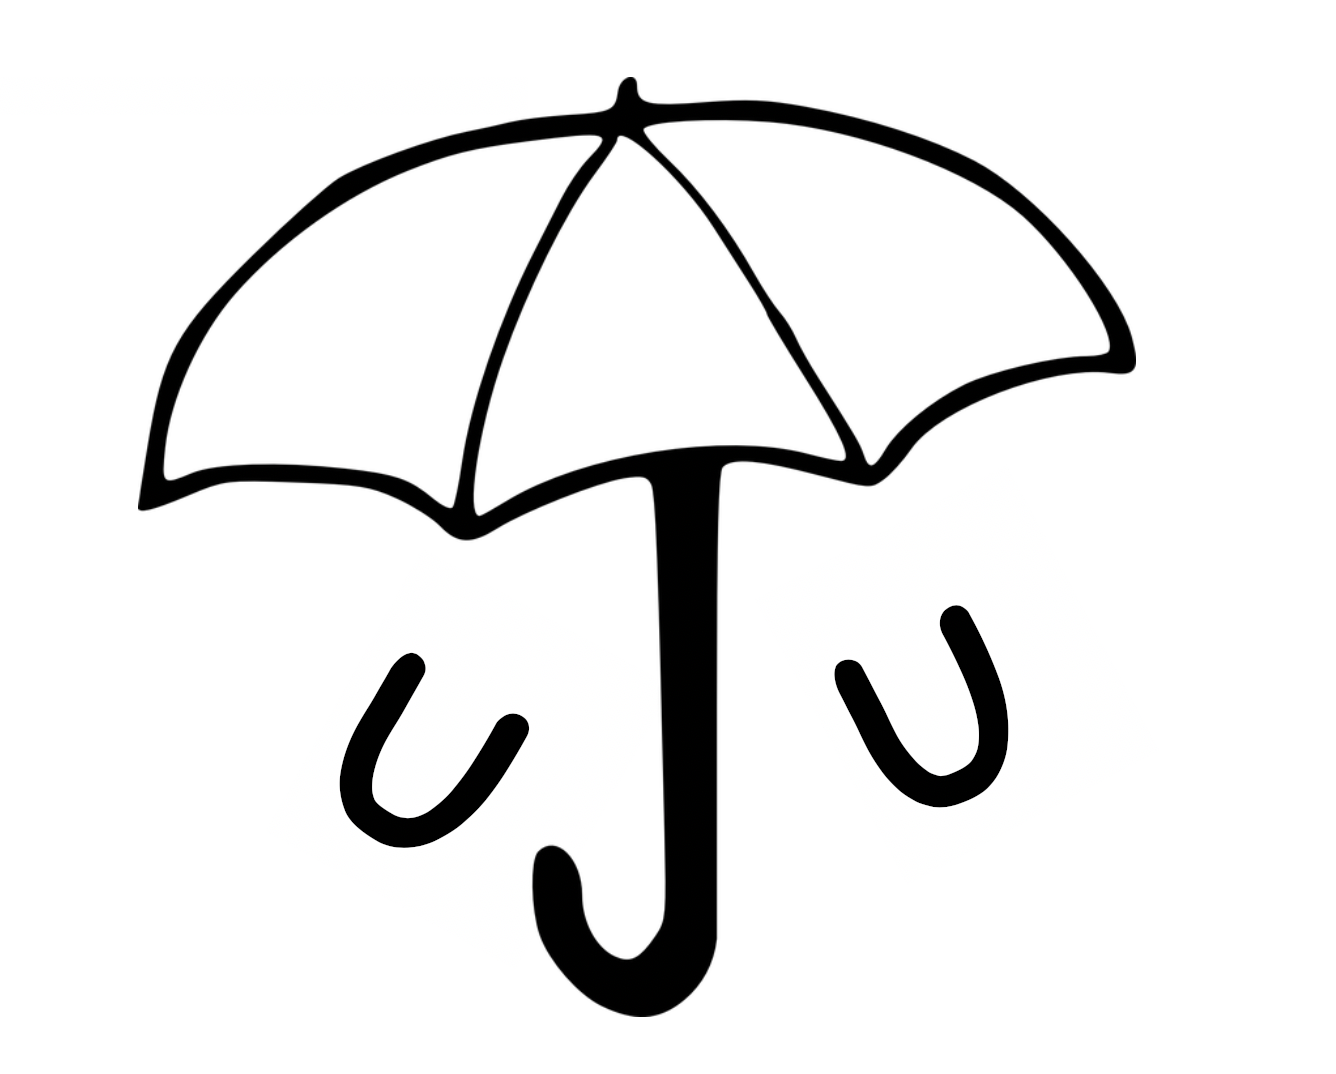 U Under an Umbrella